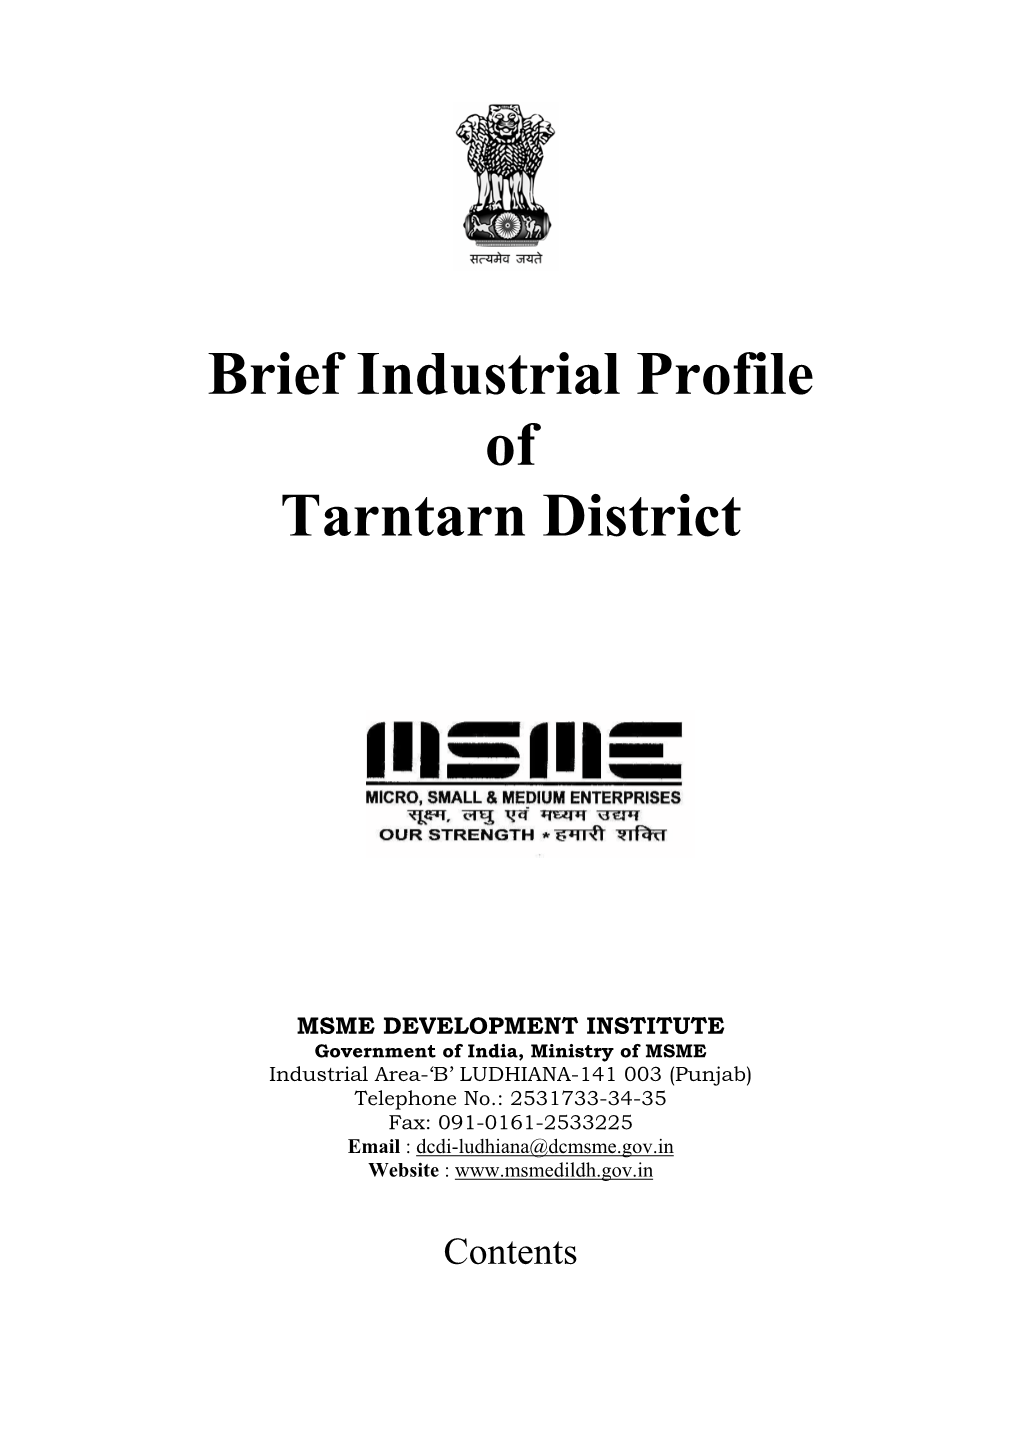 Brief Industrial Profile of Tarntarn District